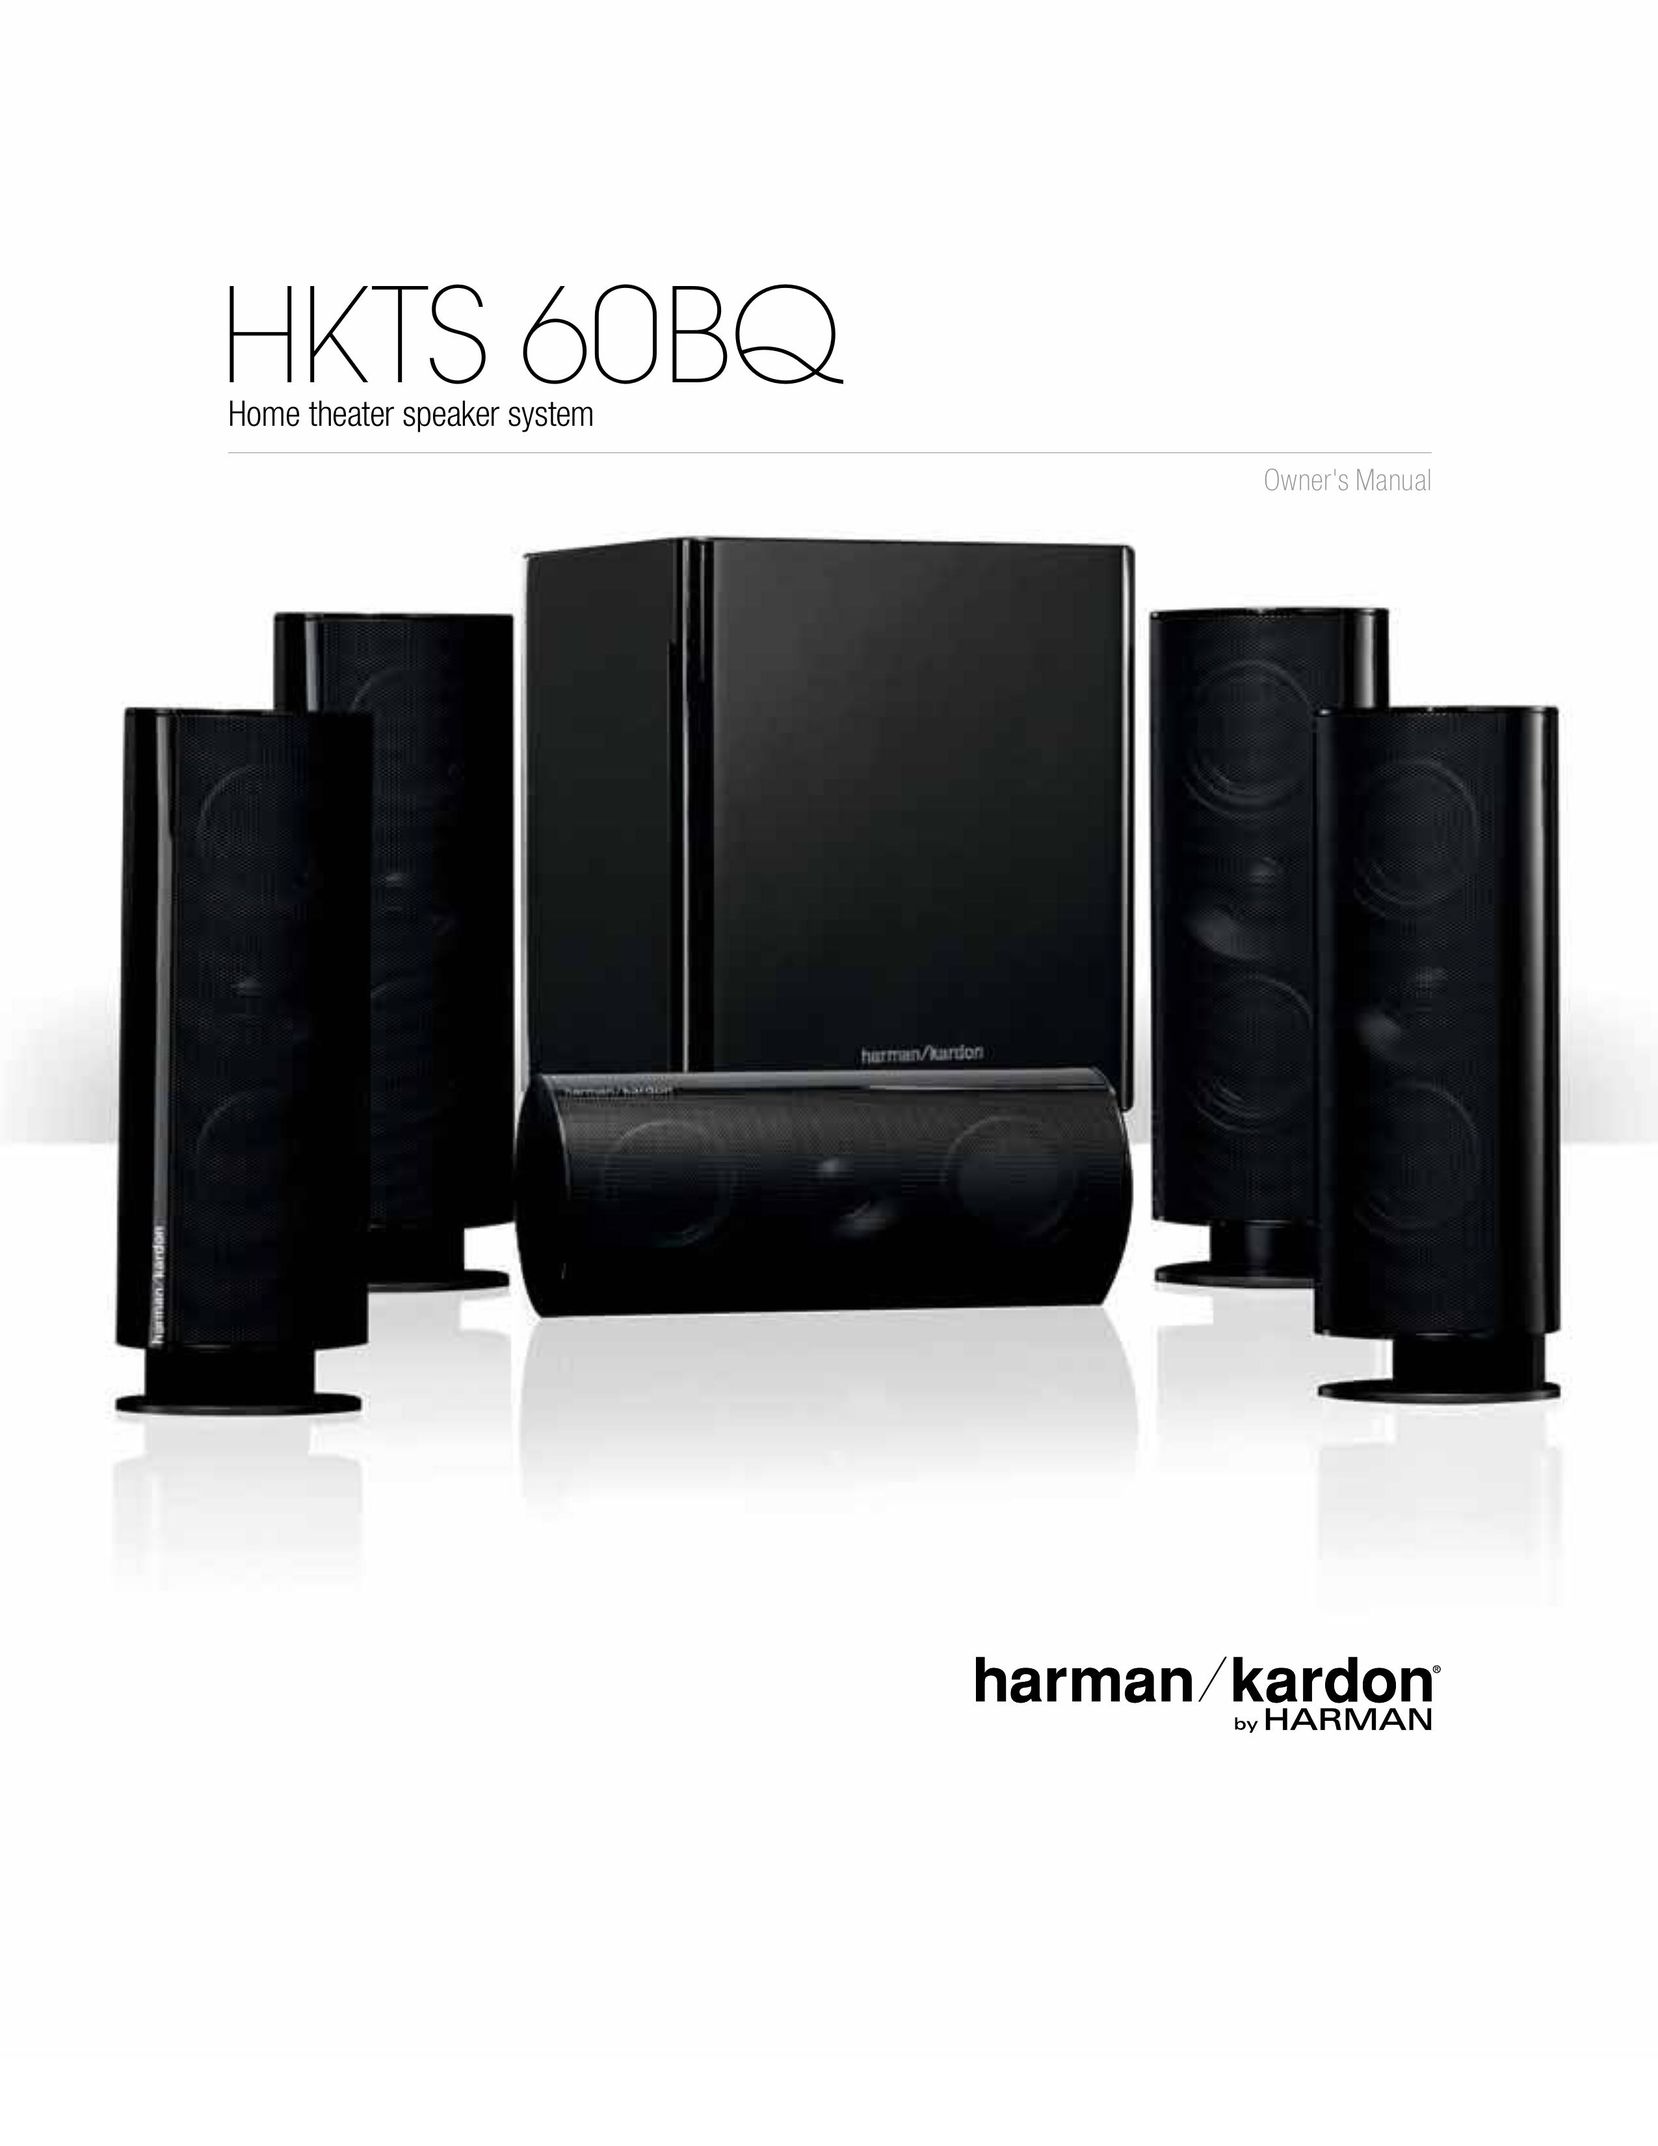 Harman-Kardon 60BQ Home Theater System User Manual